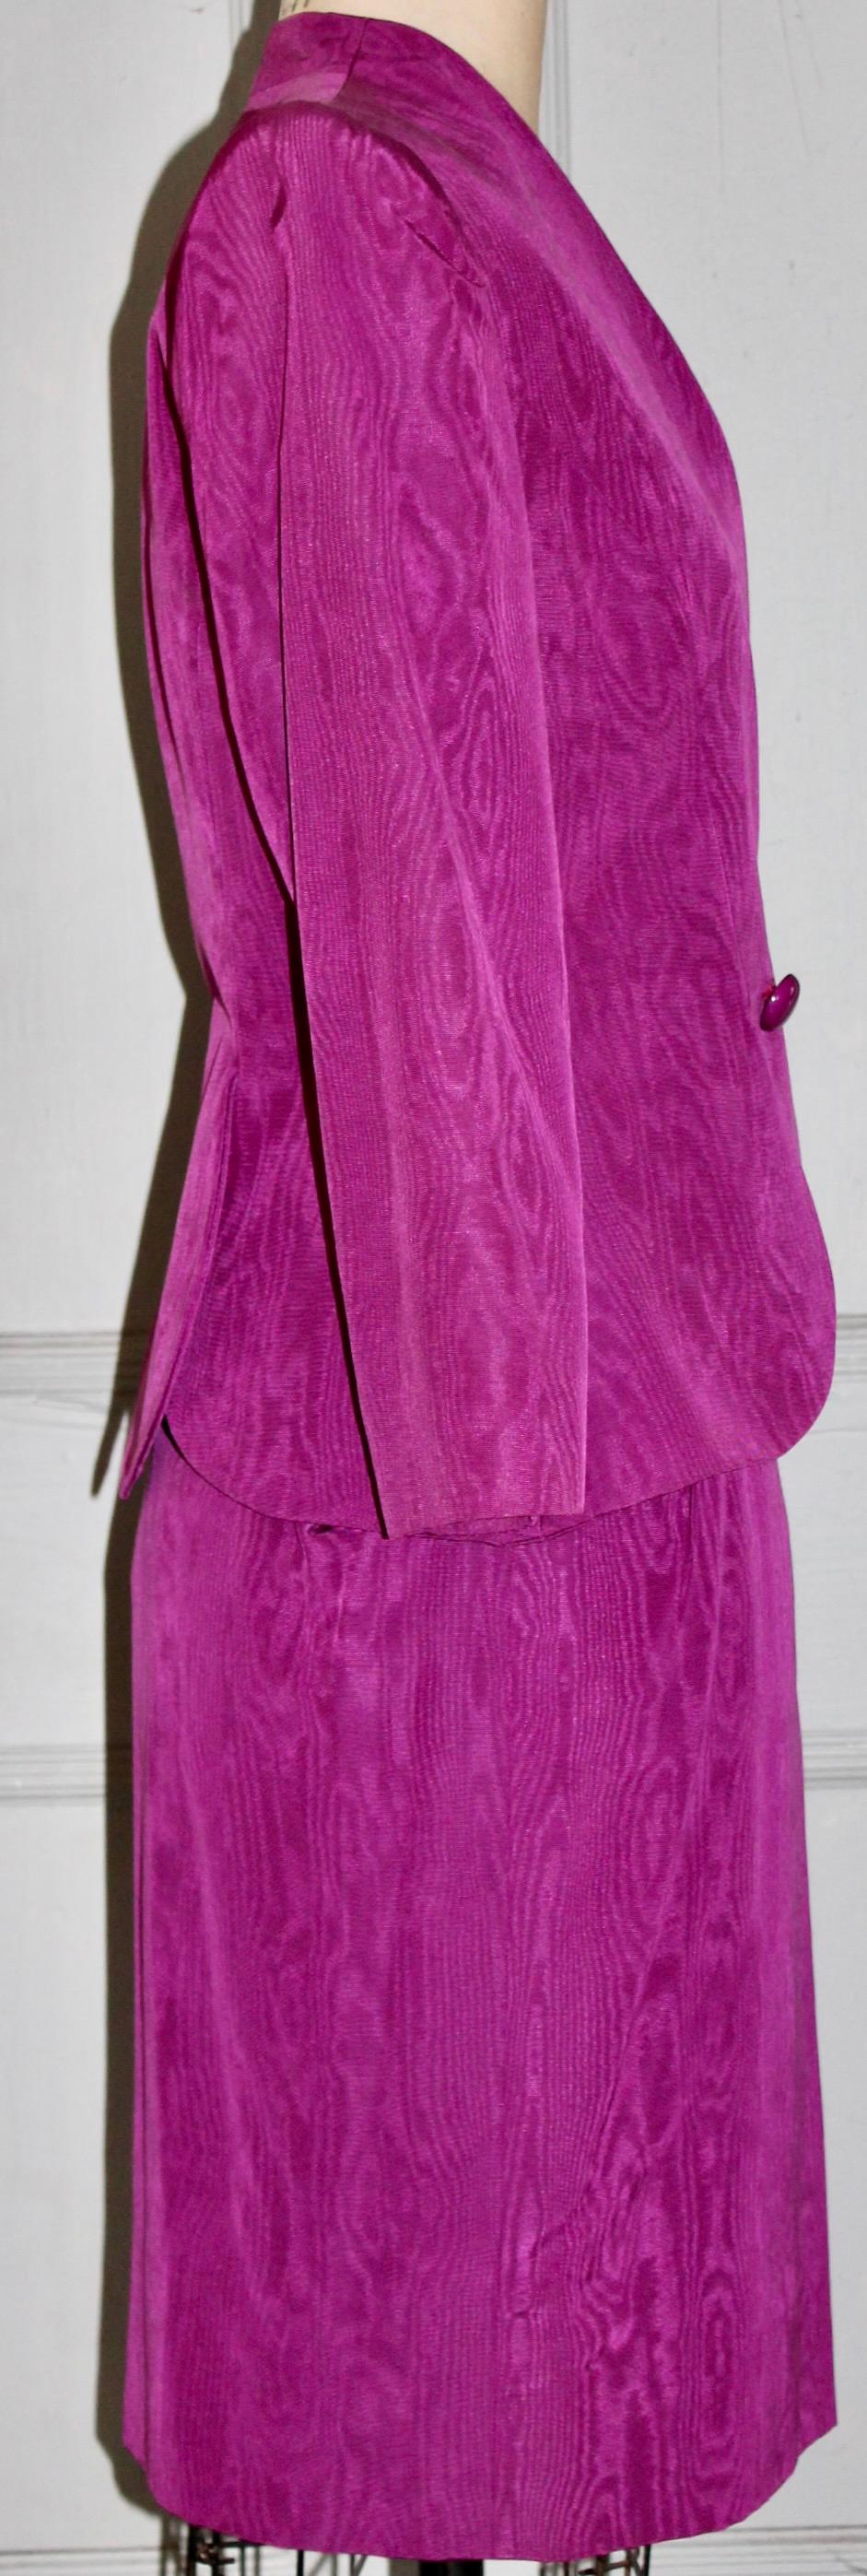 Lanvin, Paris Magenta Moire Suit In Excellent Condition For Sale In Sharon, CT